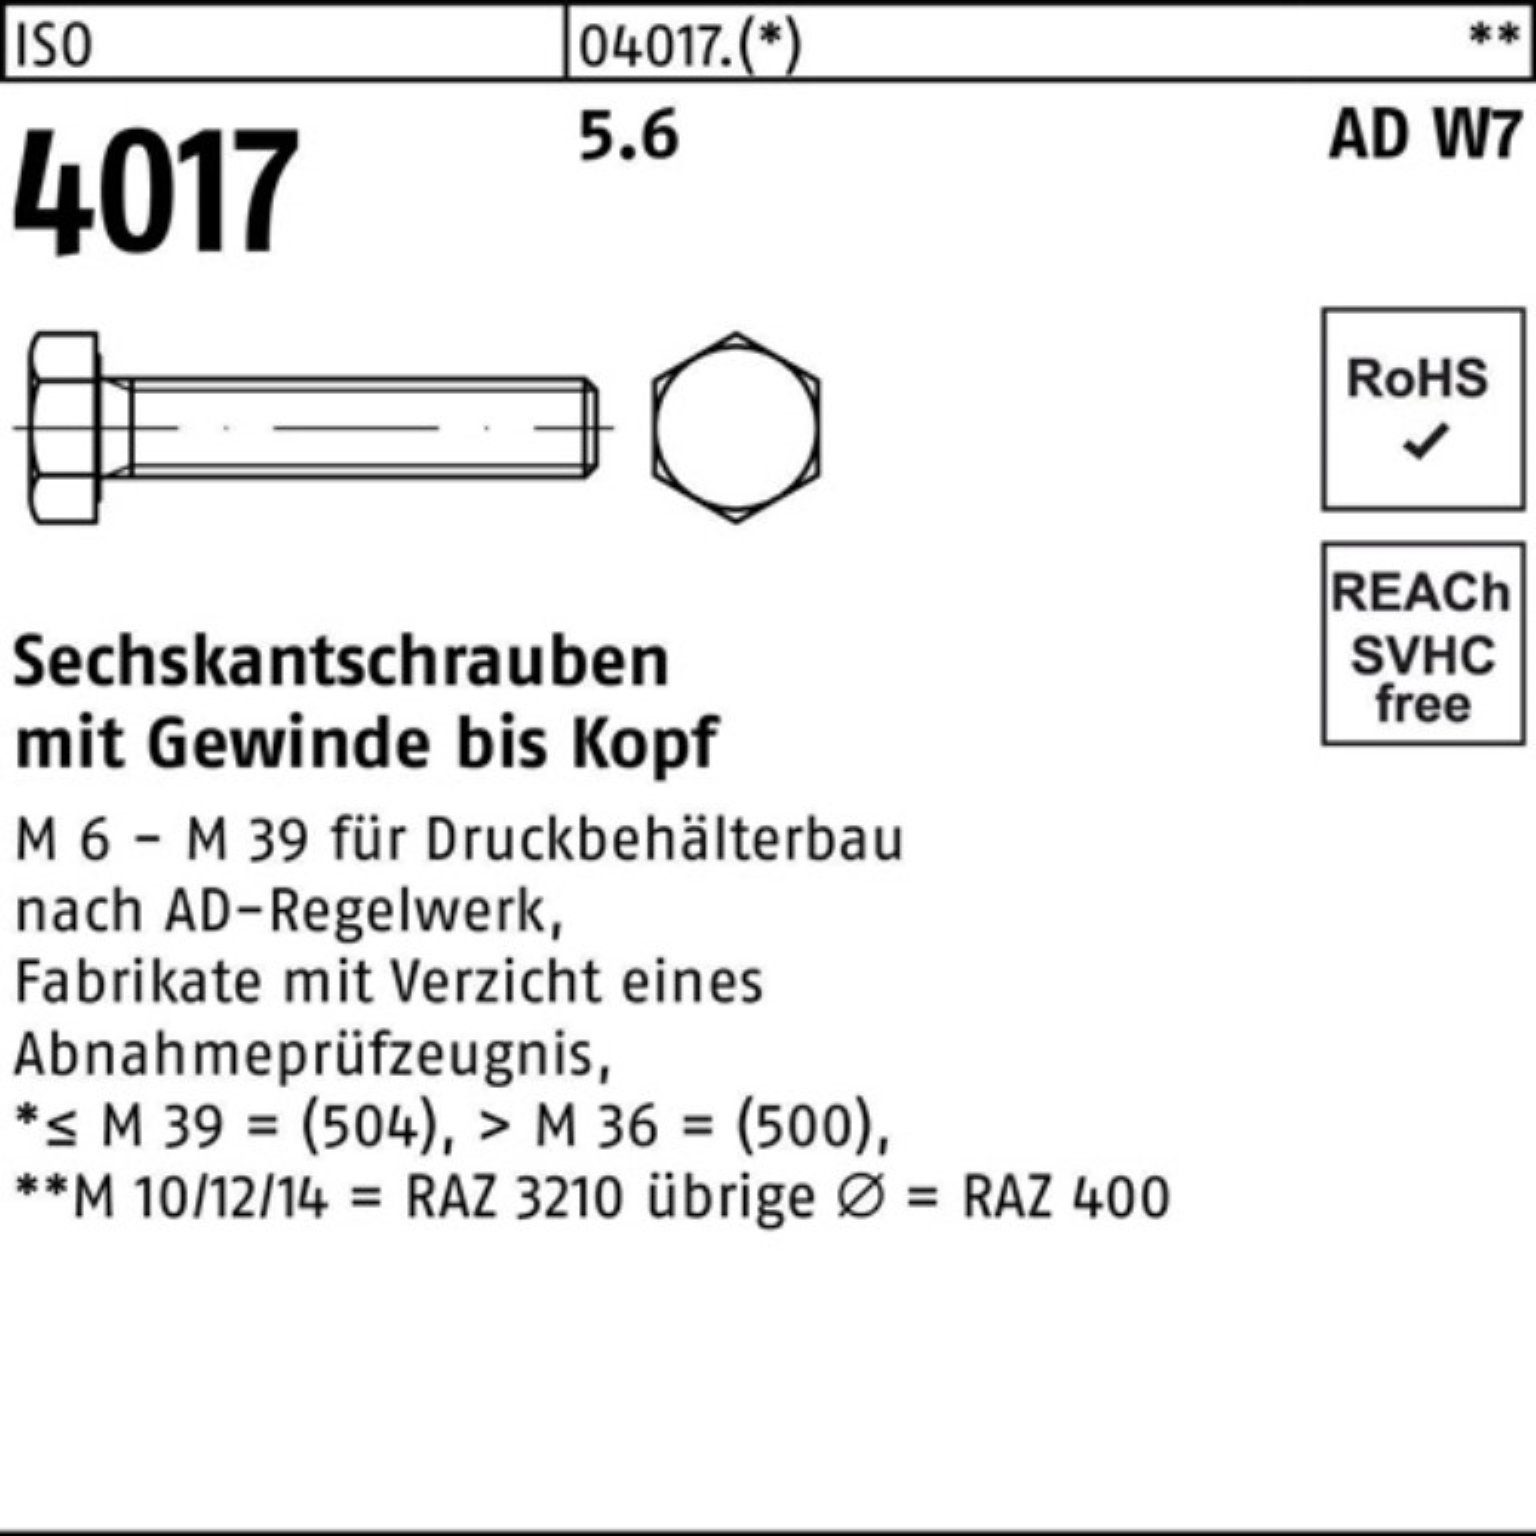 Bufab Sechskantschraube 100er ISO Pack AD M24x Sechskantschraube VG 5.6 4017 Stück W7 1 130 I